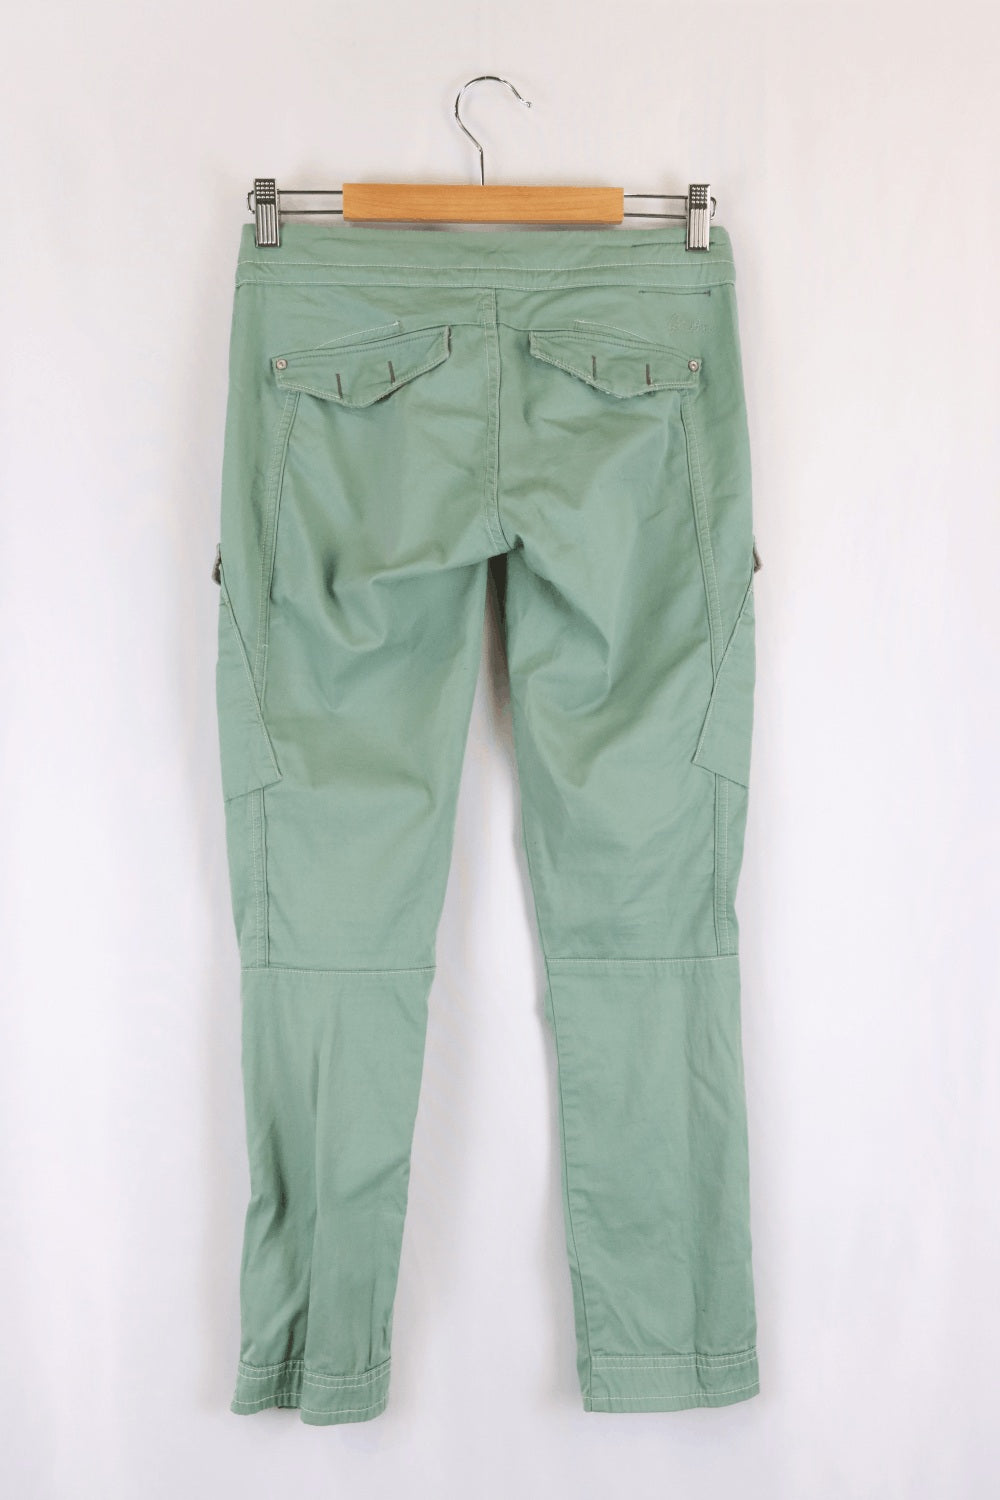 G Star Green Pants S